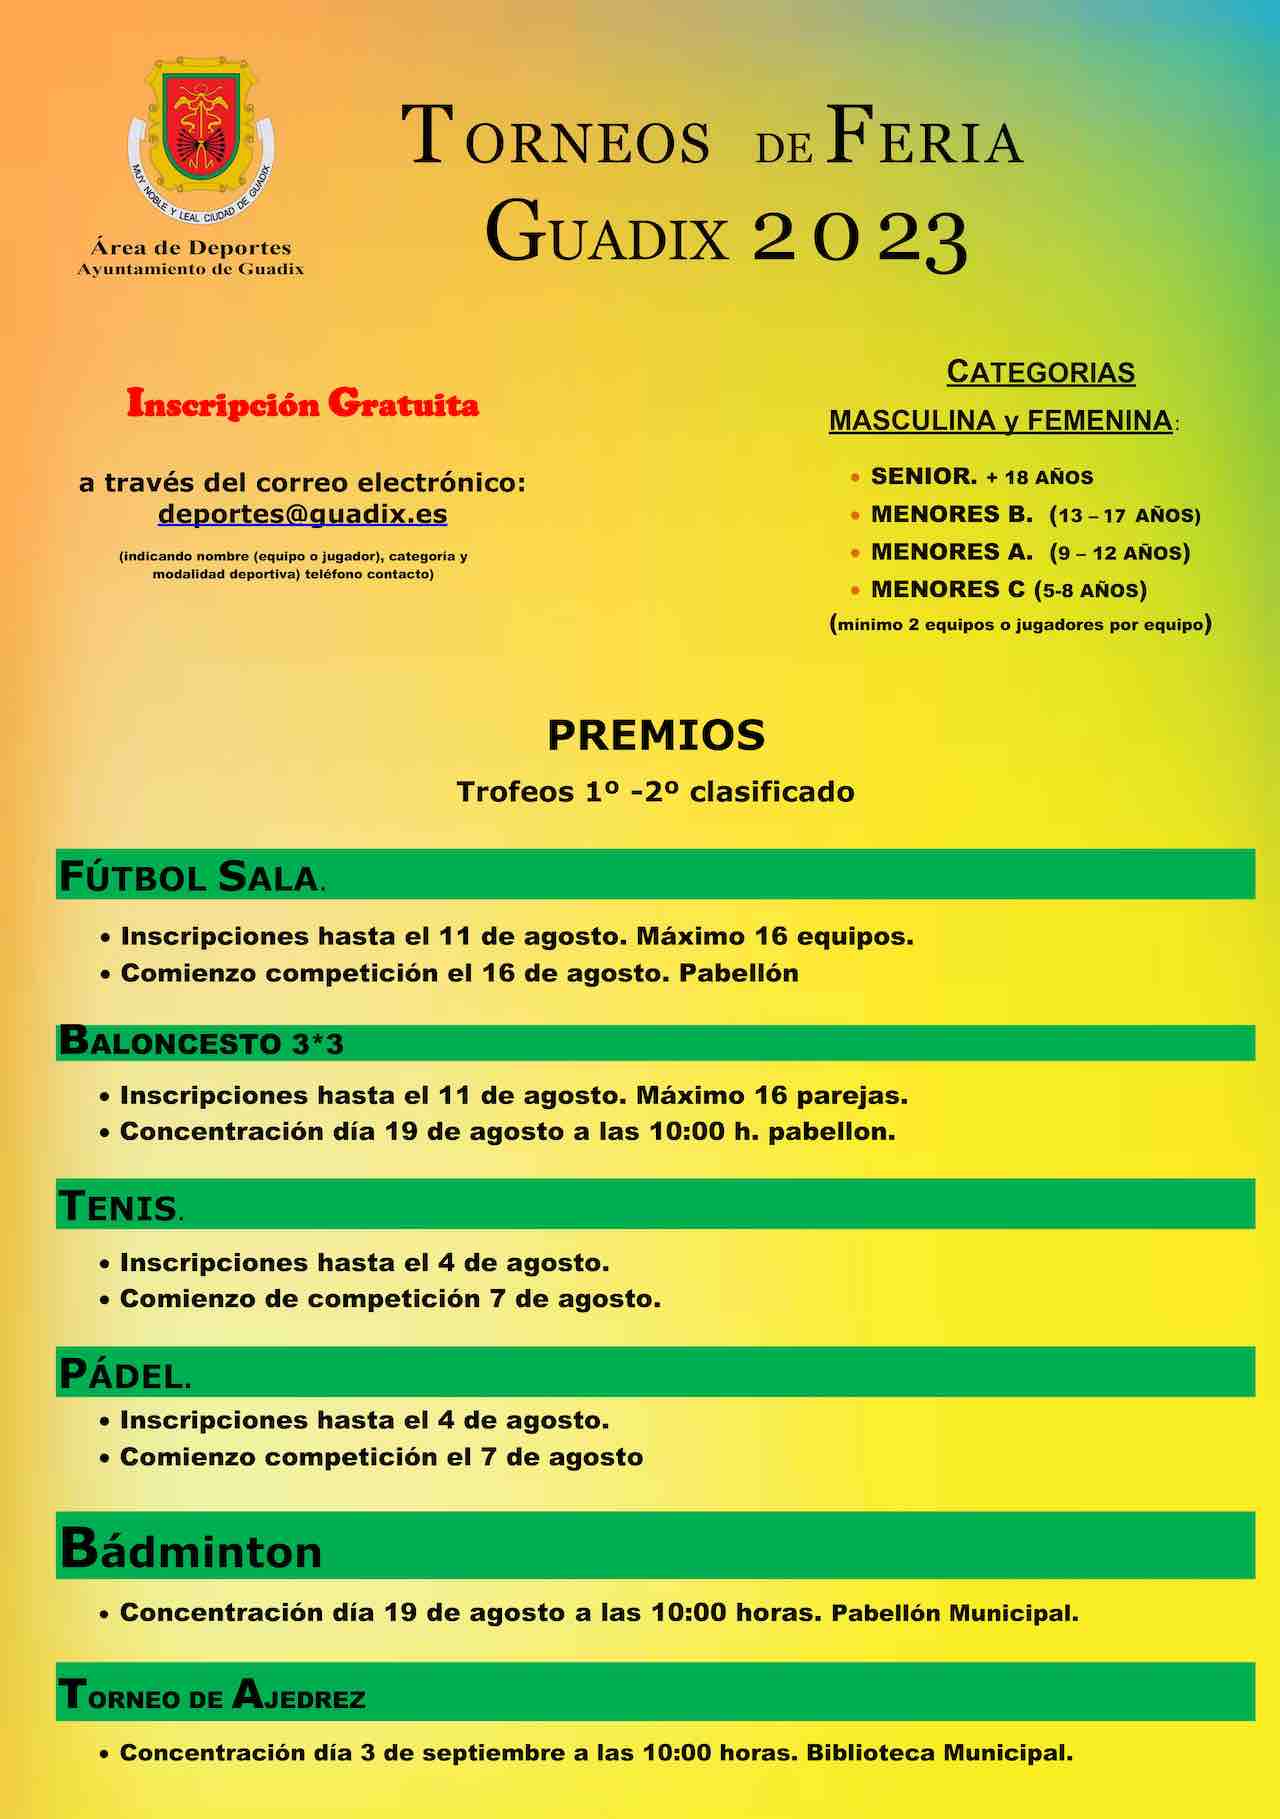 TORNEOS FERIA de Guadix 2023